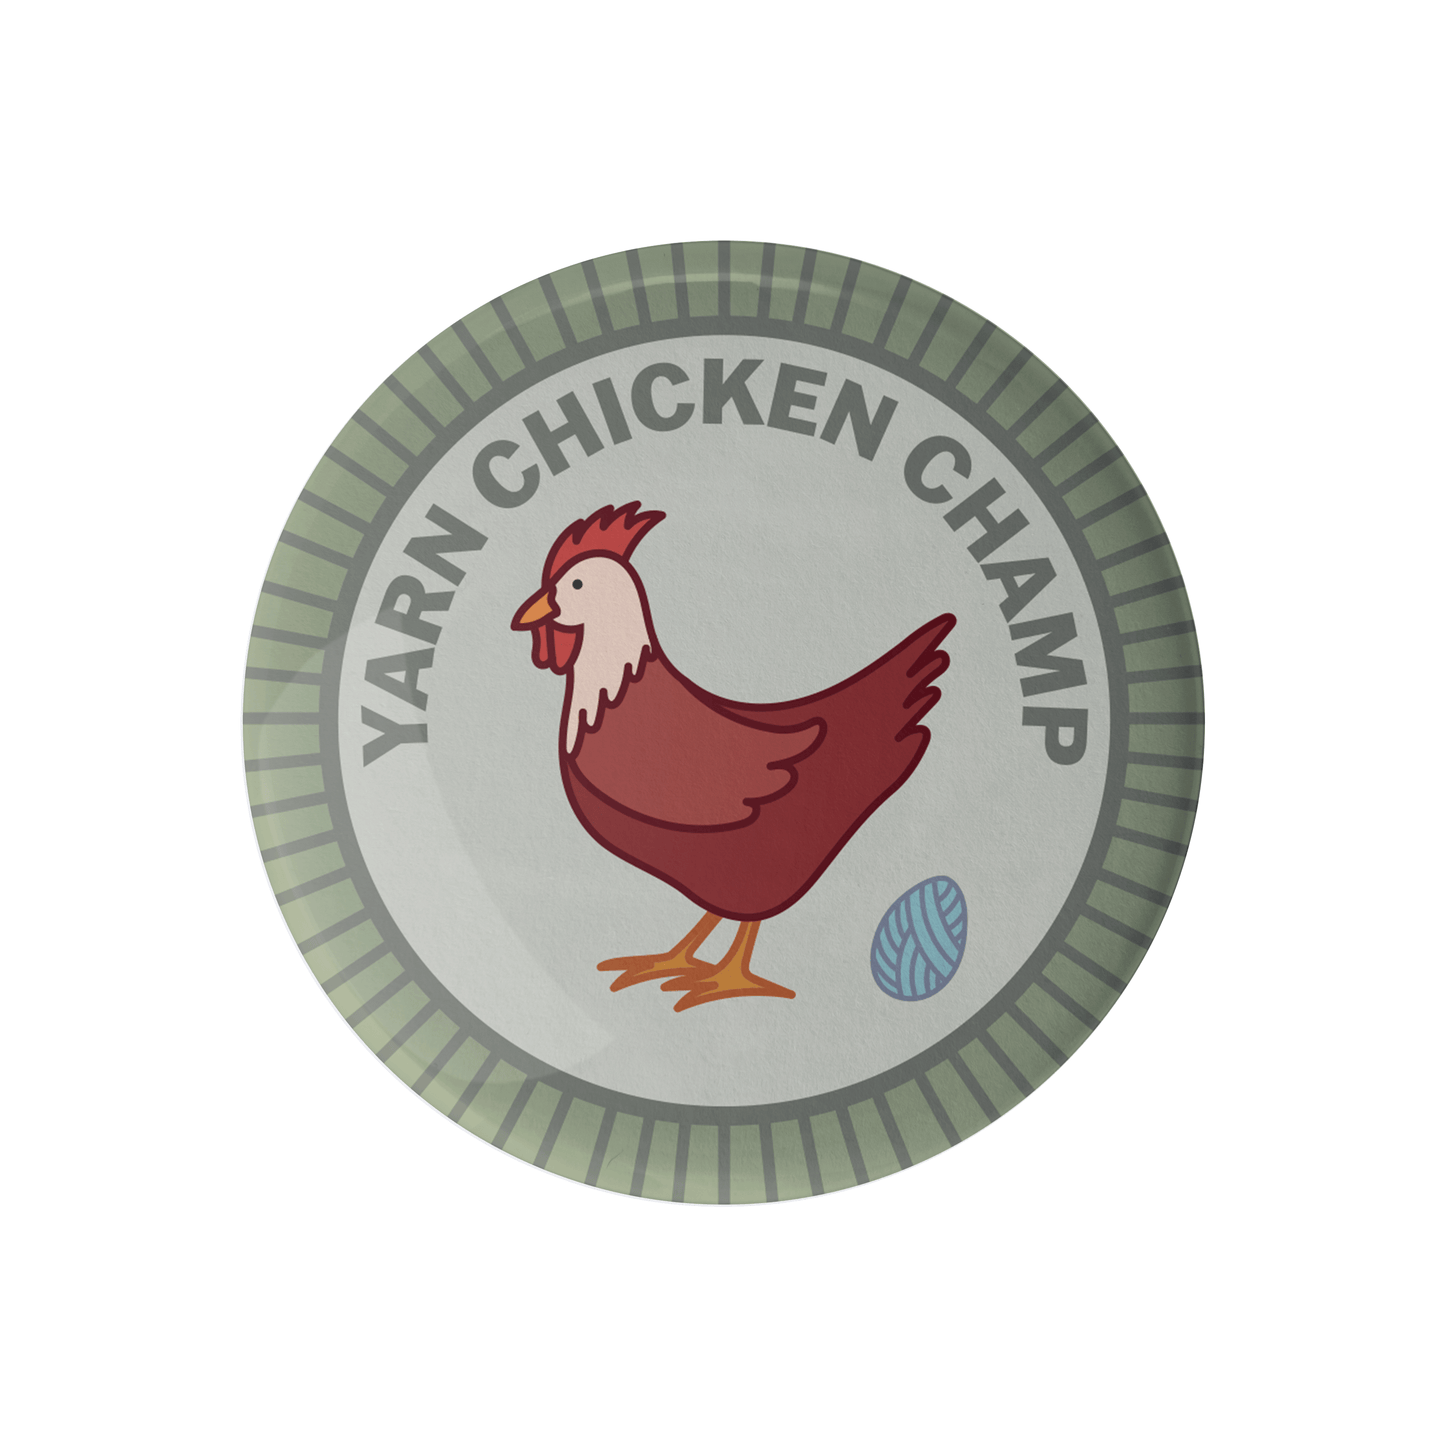 Camp Stitchwood Yarn Chicken Champ Knitting Merit Badge